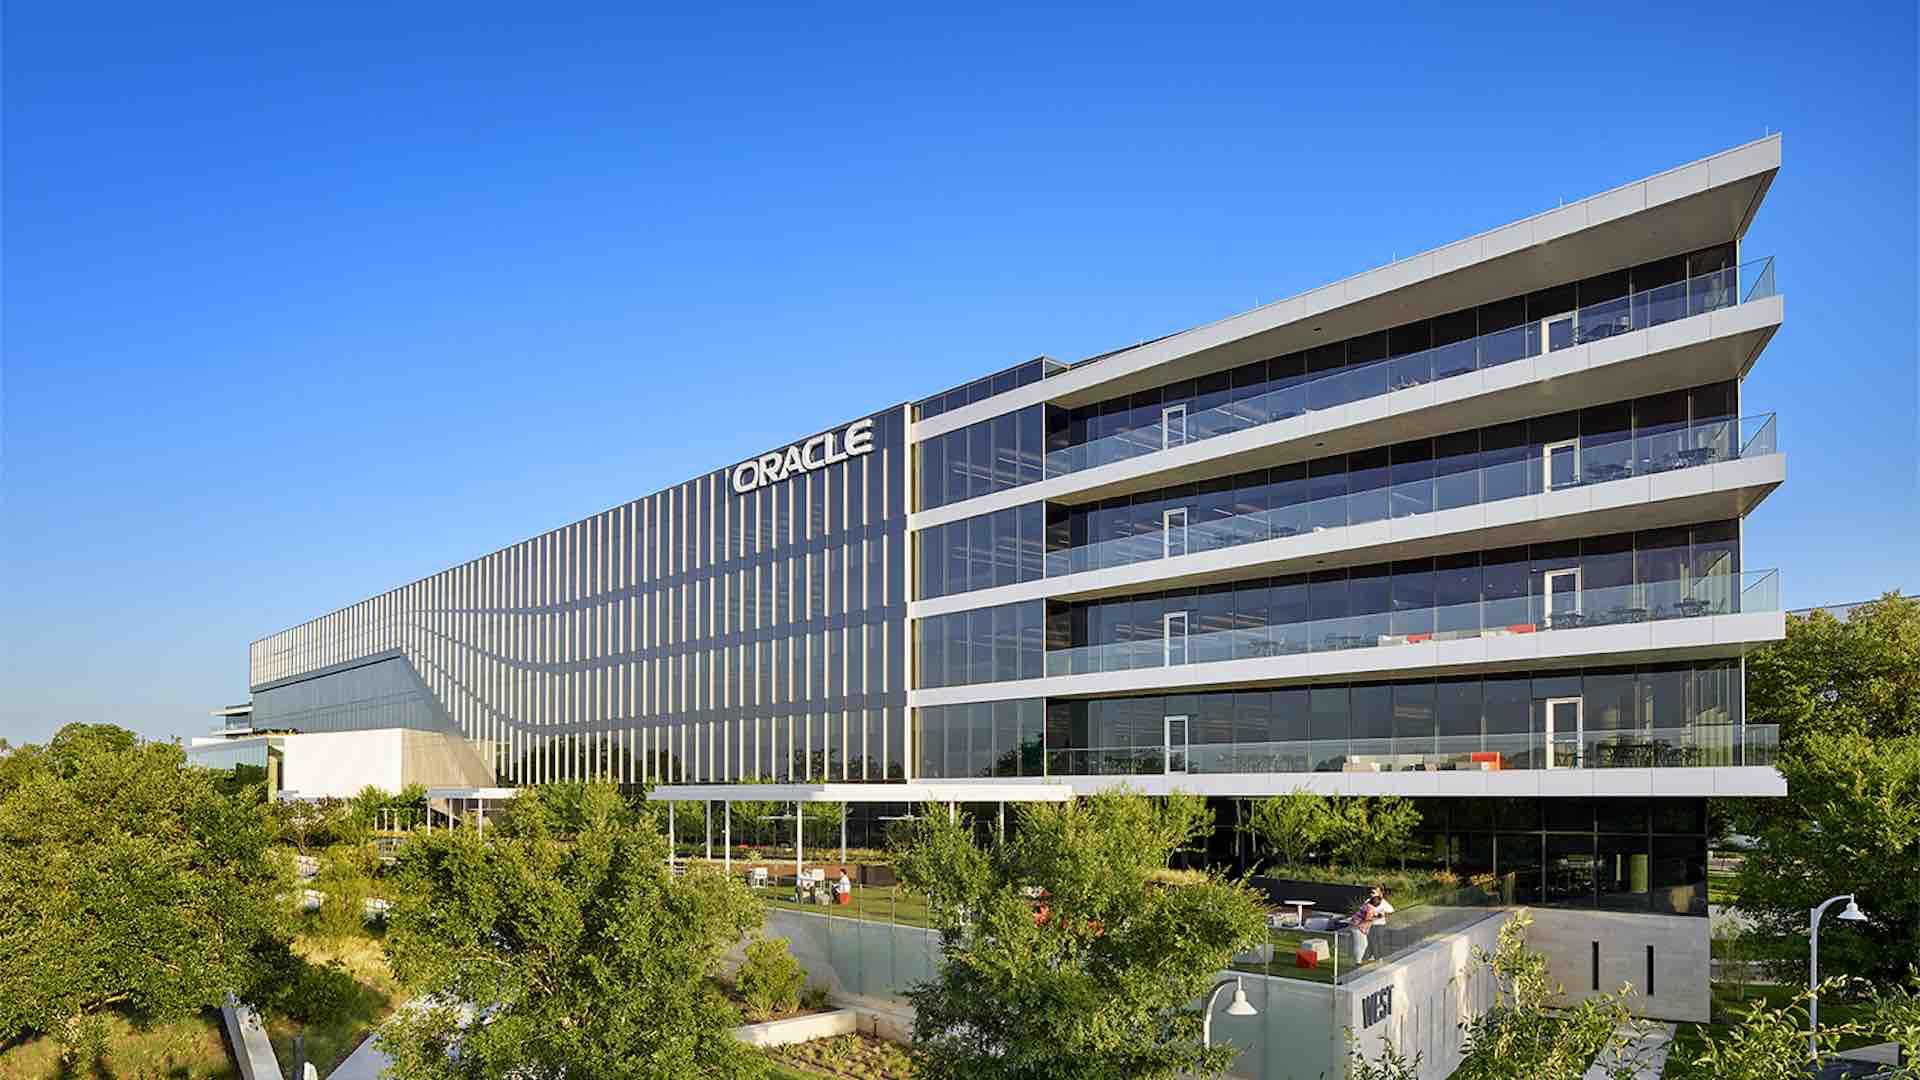 Oracle picks Nashville for HQ, tech boom ahead